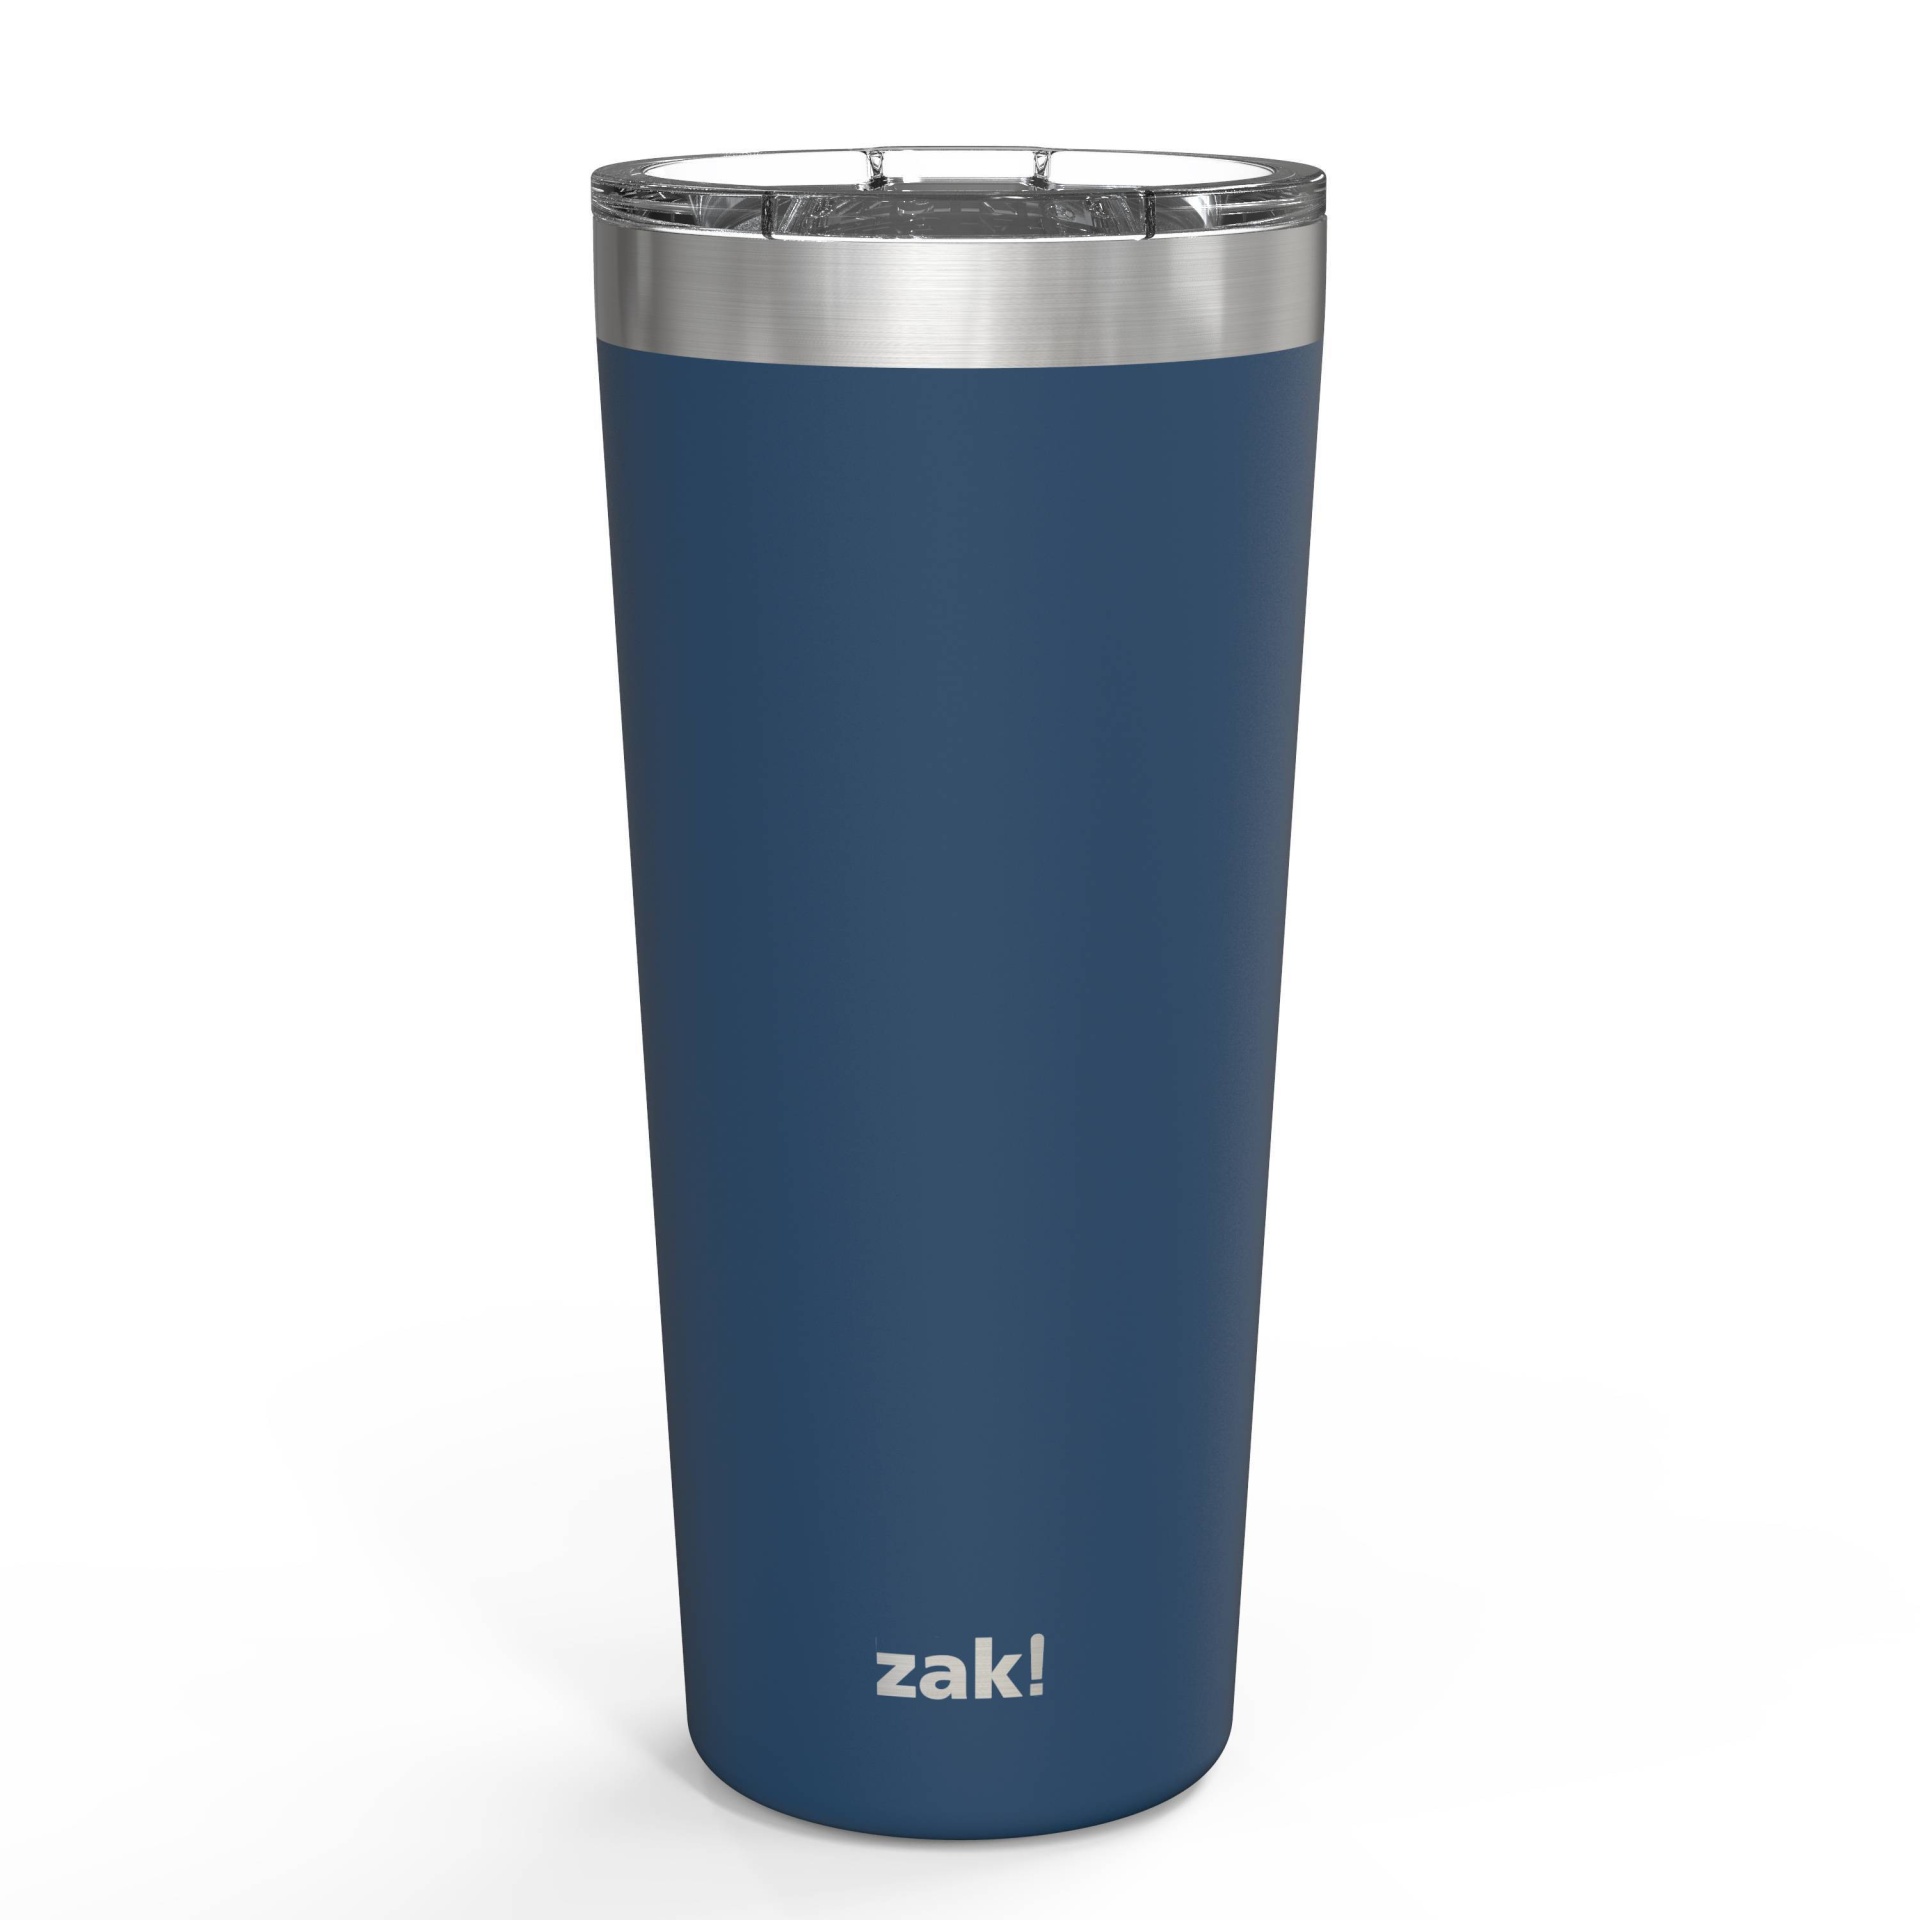 Zak! Designs 20oz Double Wall Stainless Steel Tumbler - Aqua Blue